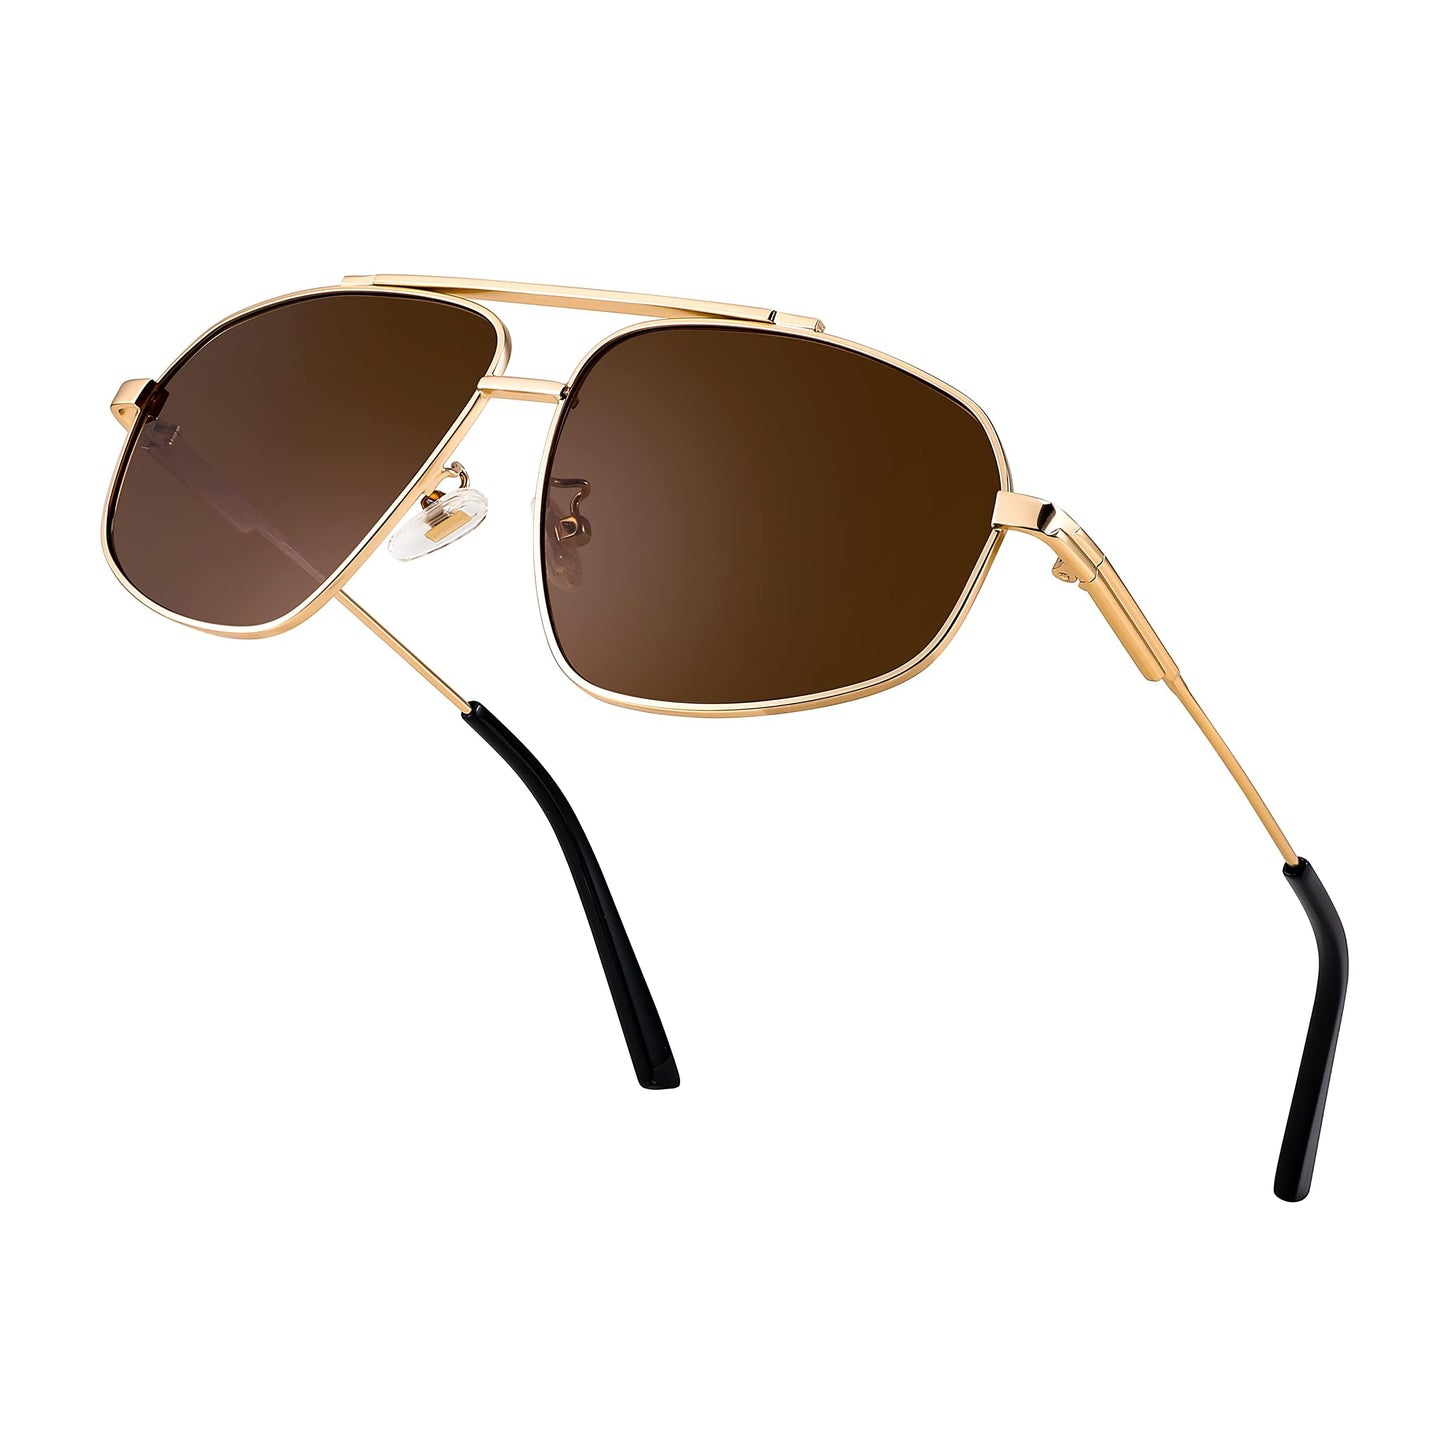 Karsaer Retro Aviator Polarized Sunglasses Women Men 90s Small Vintage Shades Trendy Mirrored Sunglasses